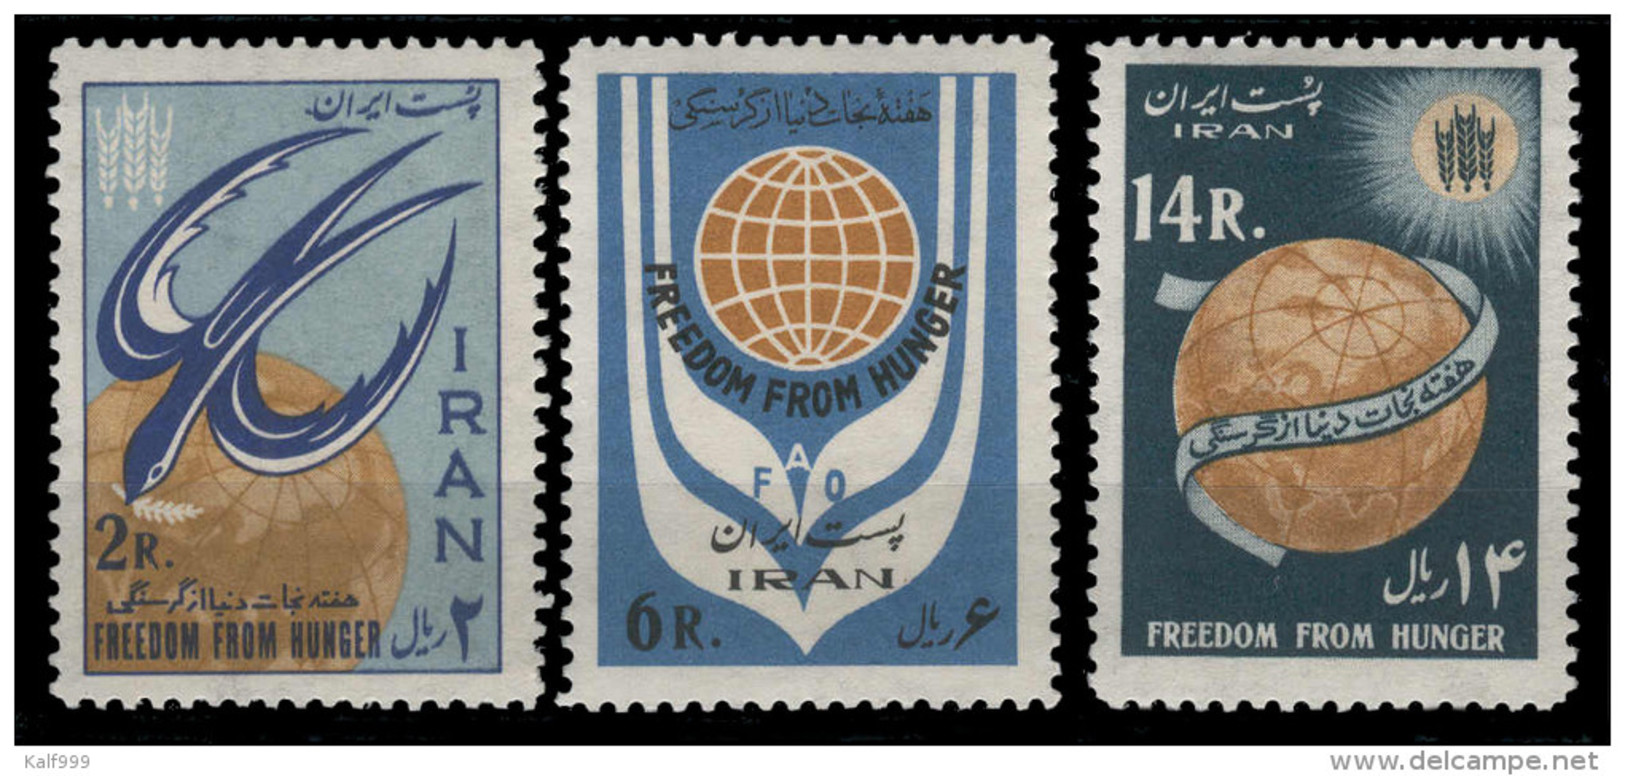 ~~~ Iran Persia 1963 - Freedom From Hunger - Mi. 1153/1155 ** MNH - CV 7.50 Euro ~~~ - Iran